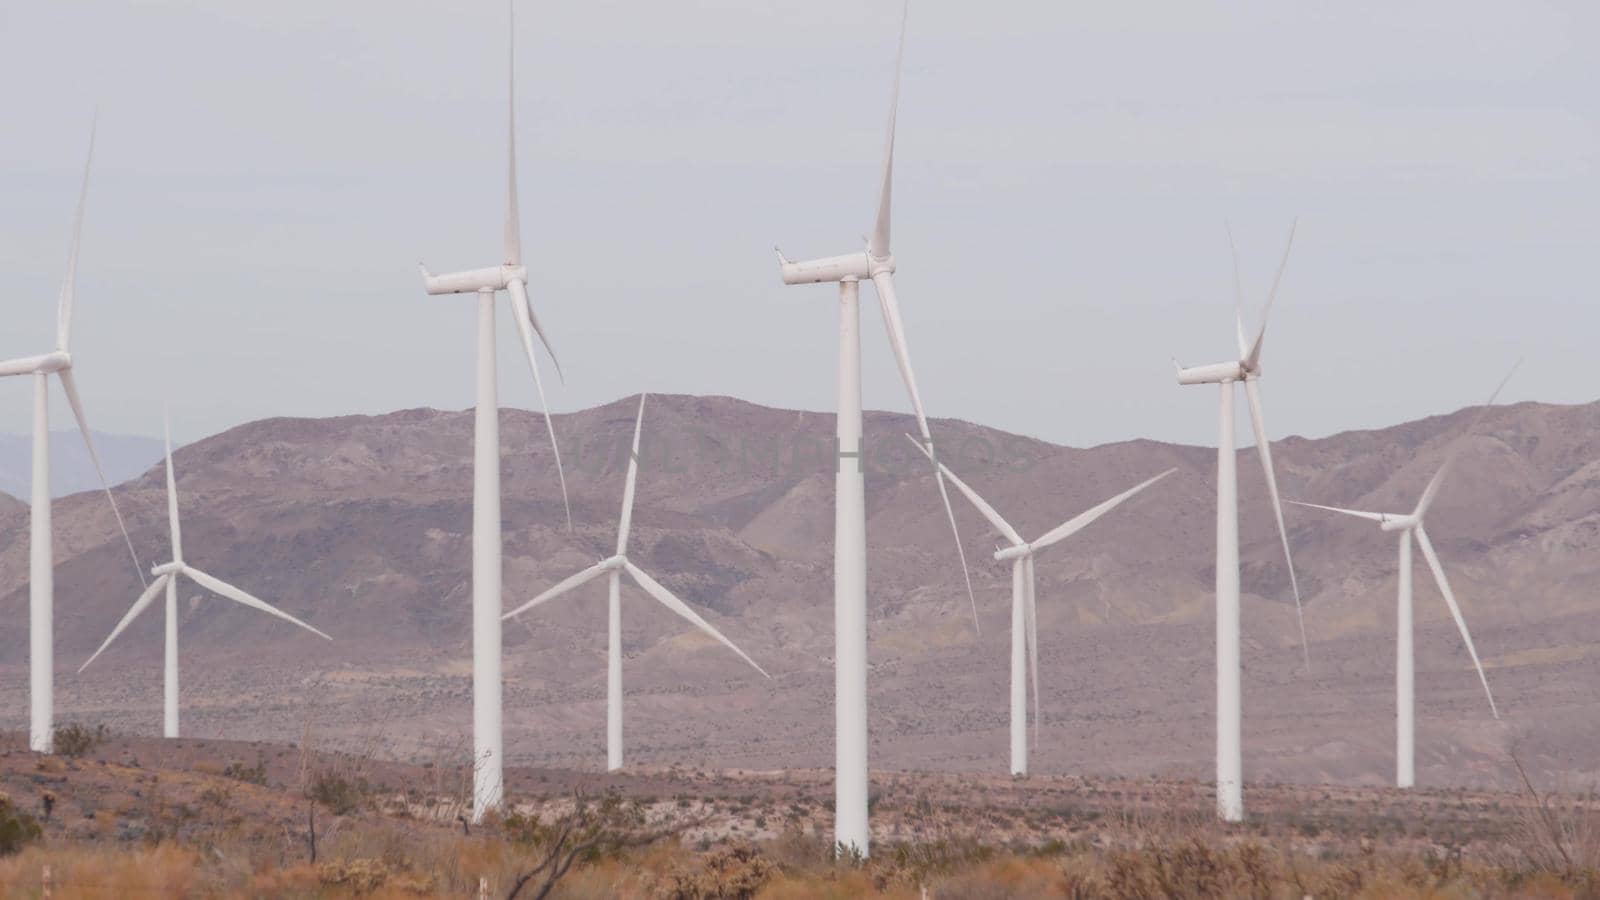 Windmills turbine rotating, wind farm or power plant, alternative green renewable energy generators, industrial field in California desert USA. Electricity generation on windfarm. El Centro, Kumeyaay.